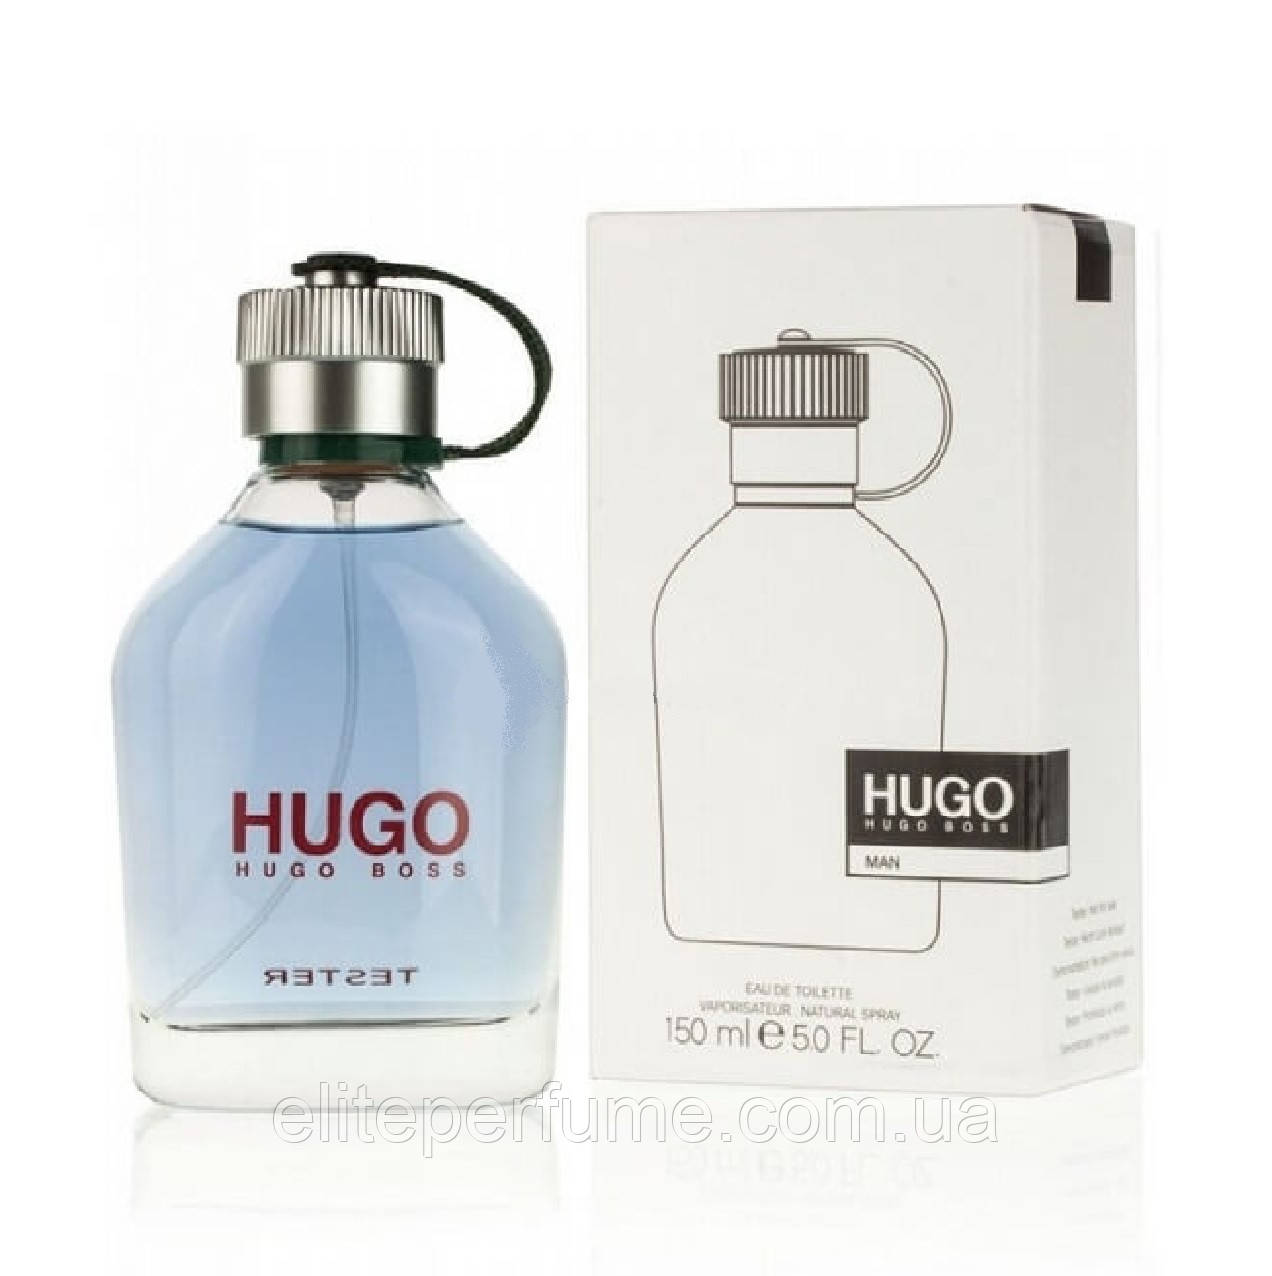 Hugo me. Hugo Boss Hugo men 100 мл. Hugo Boss Hugo man 150 мл. Тестер мужской Hugo Boss Hugo man 150 ml. Hugo Boss Hugo 100мл.